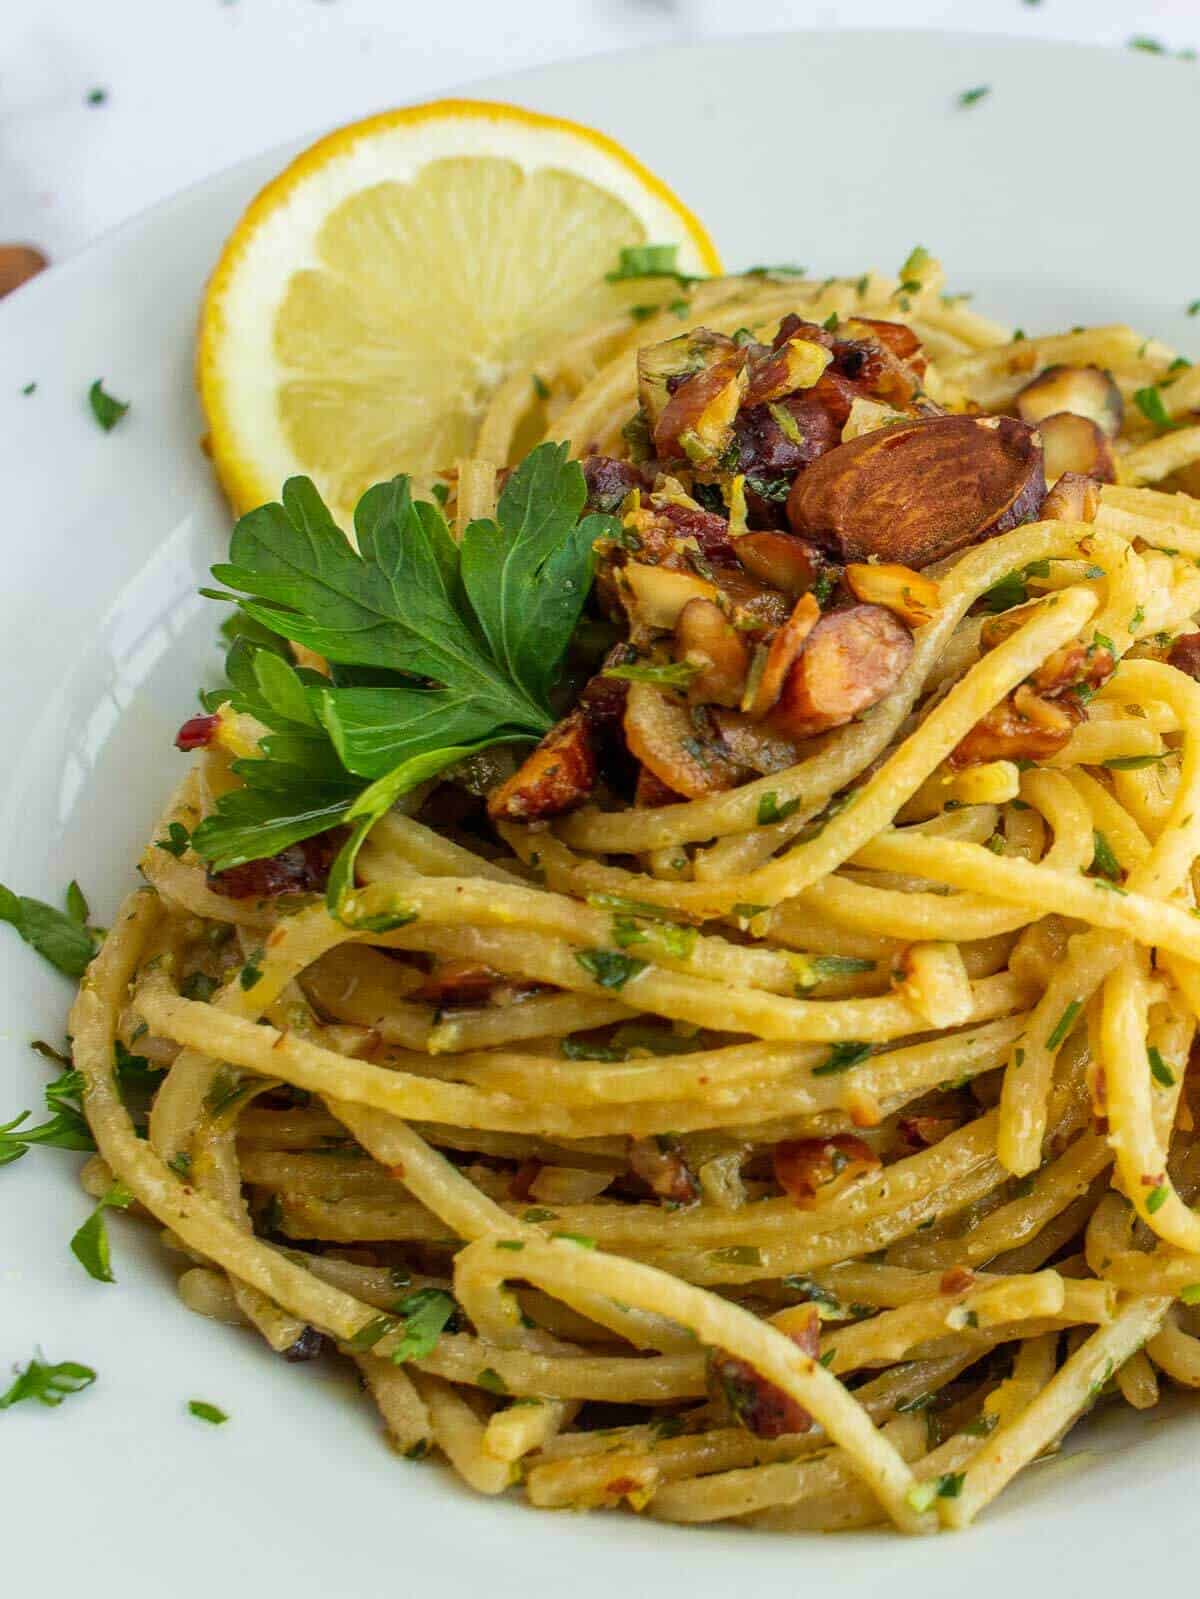 lemony garlic pasta served with toasted almonds.